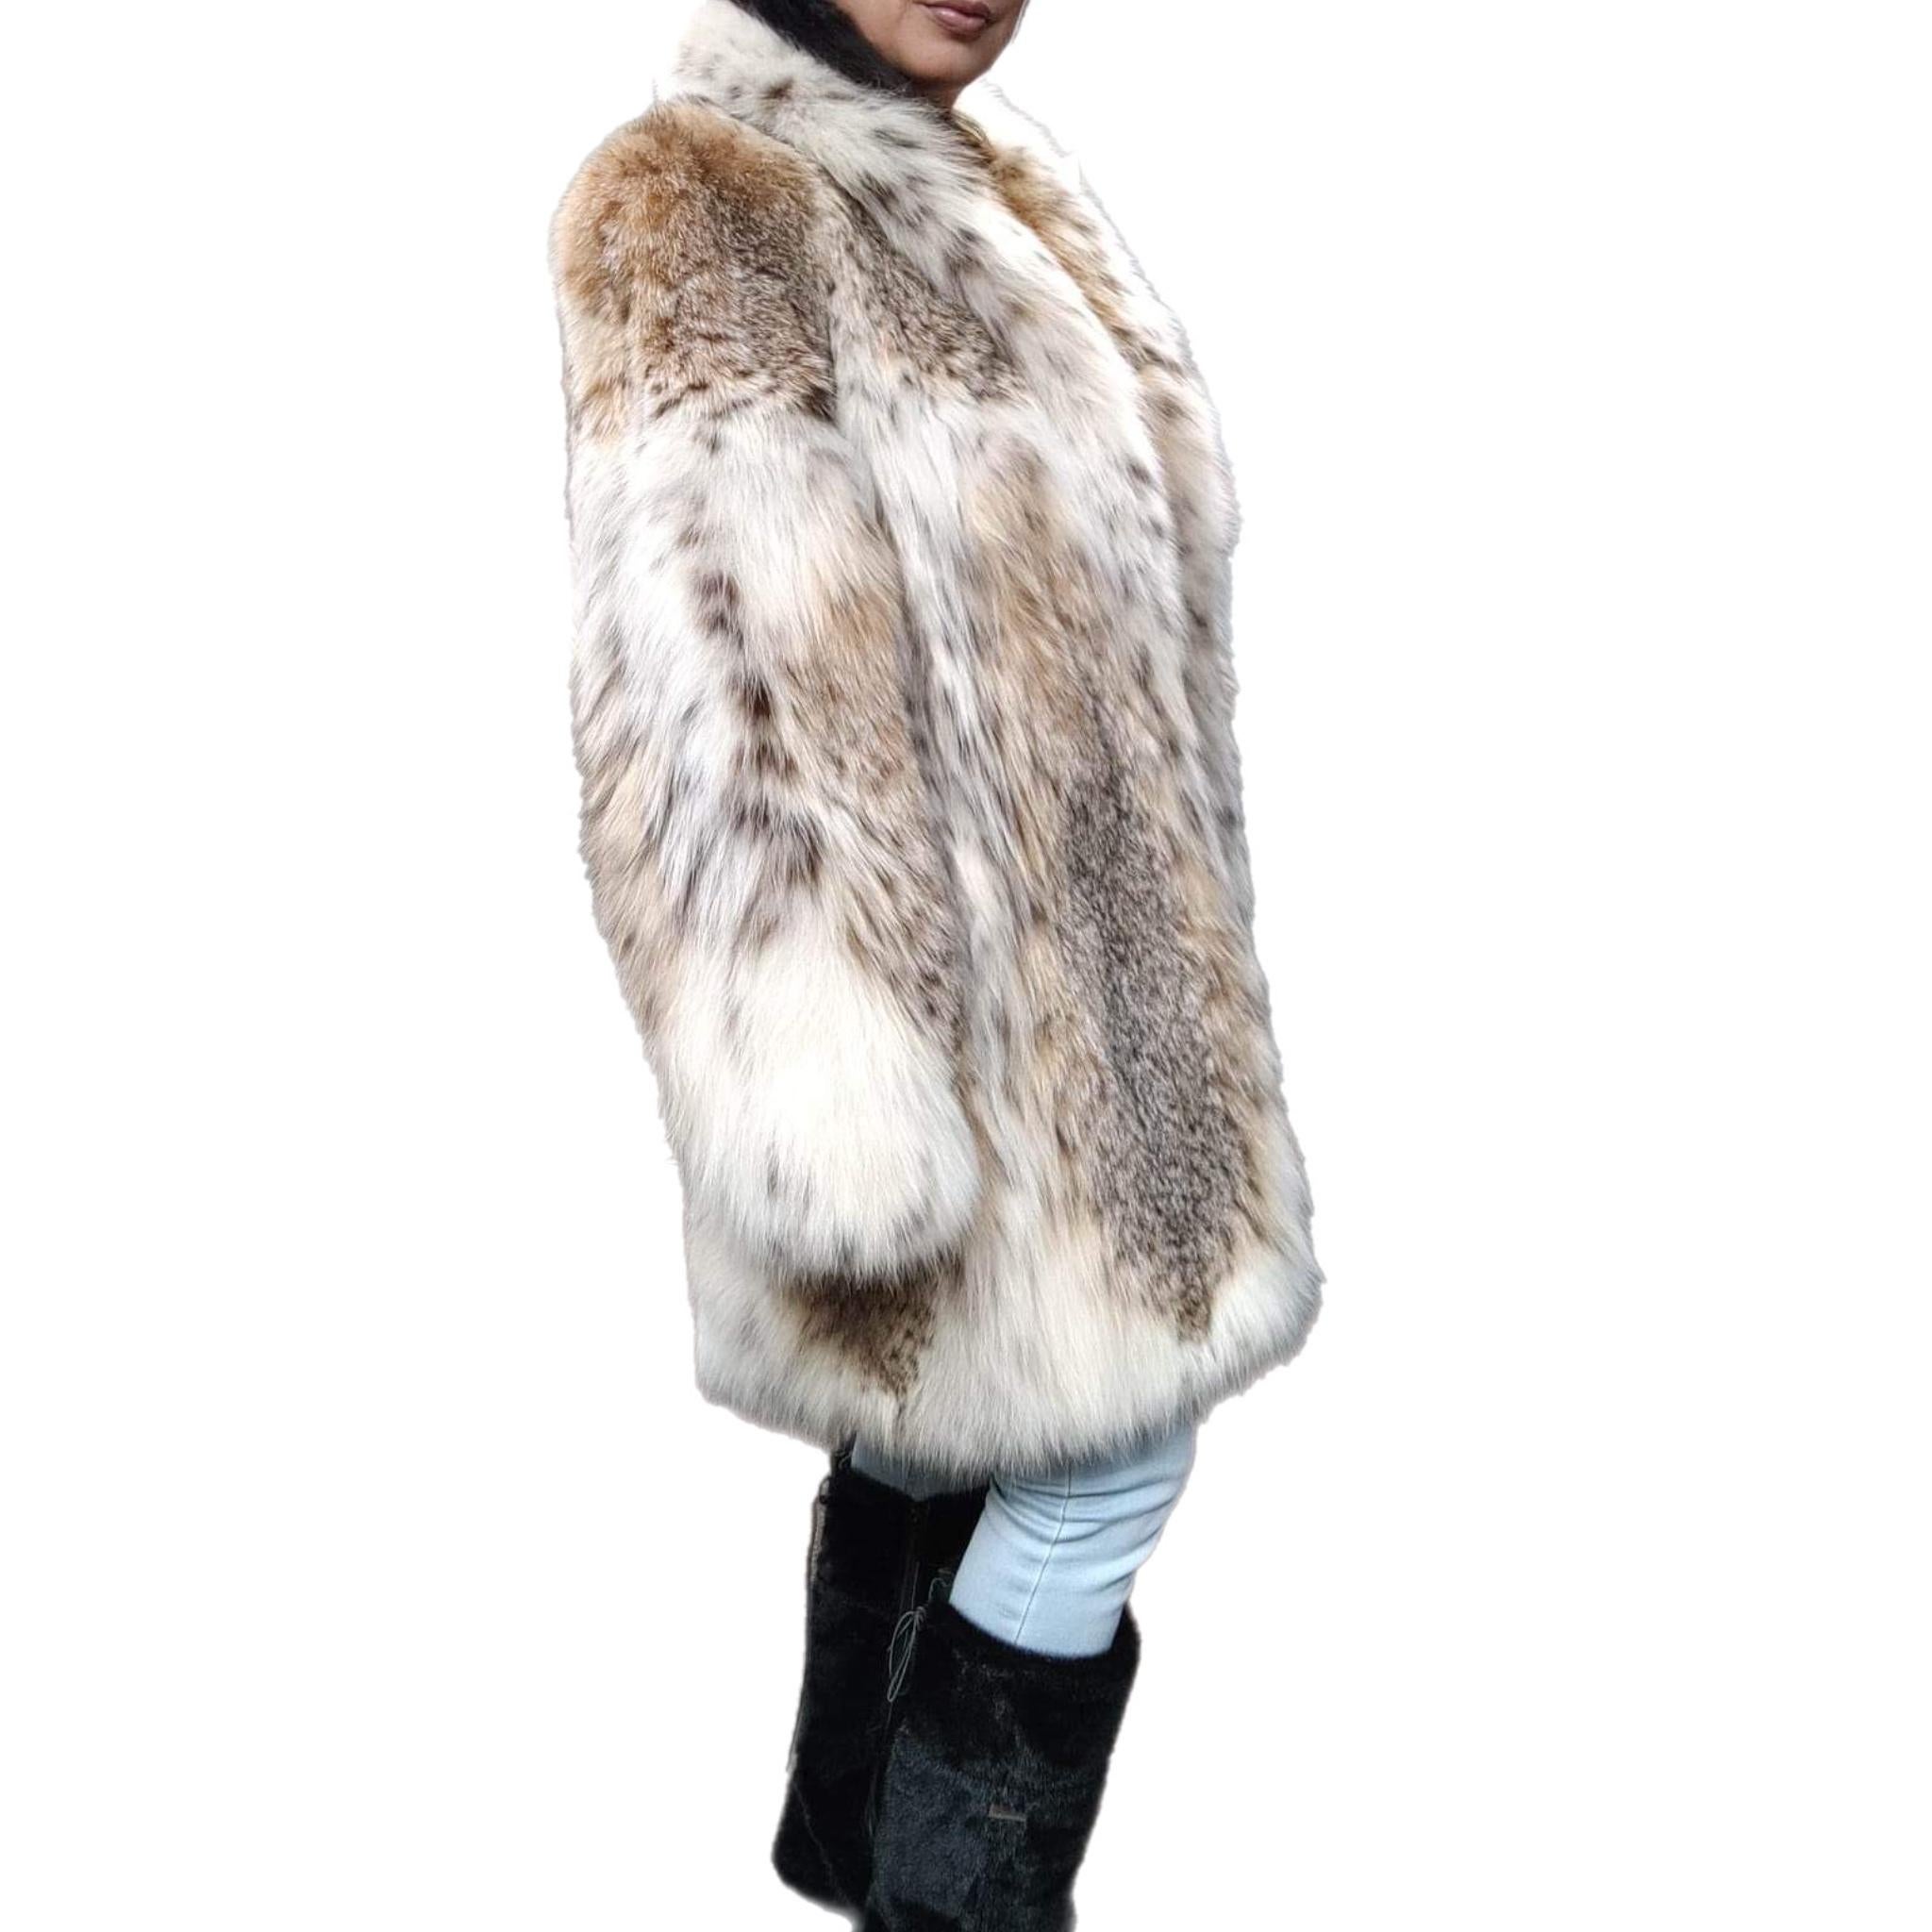 Brand new lightweight lynx fur coat size 12-14 6